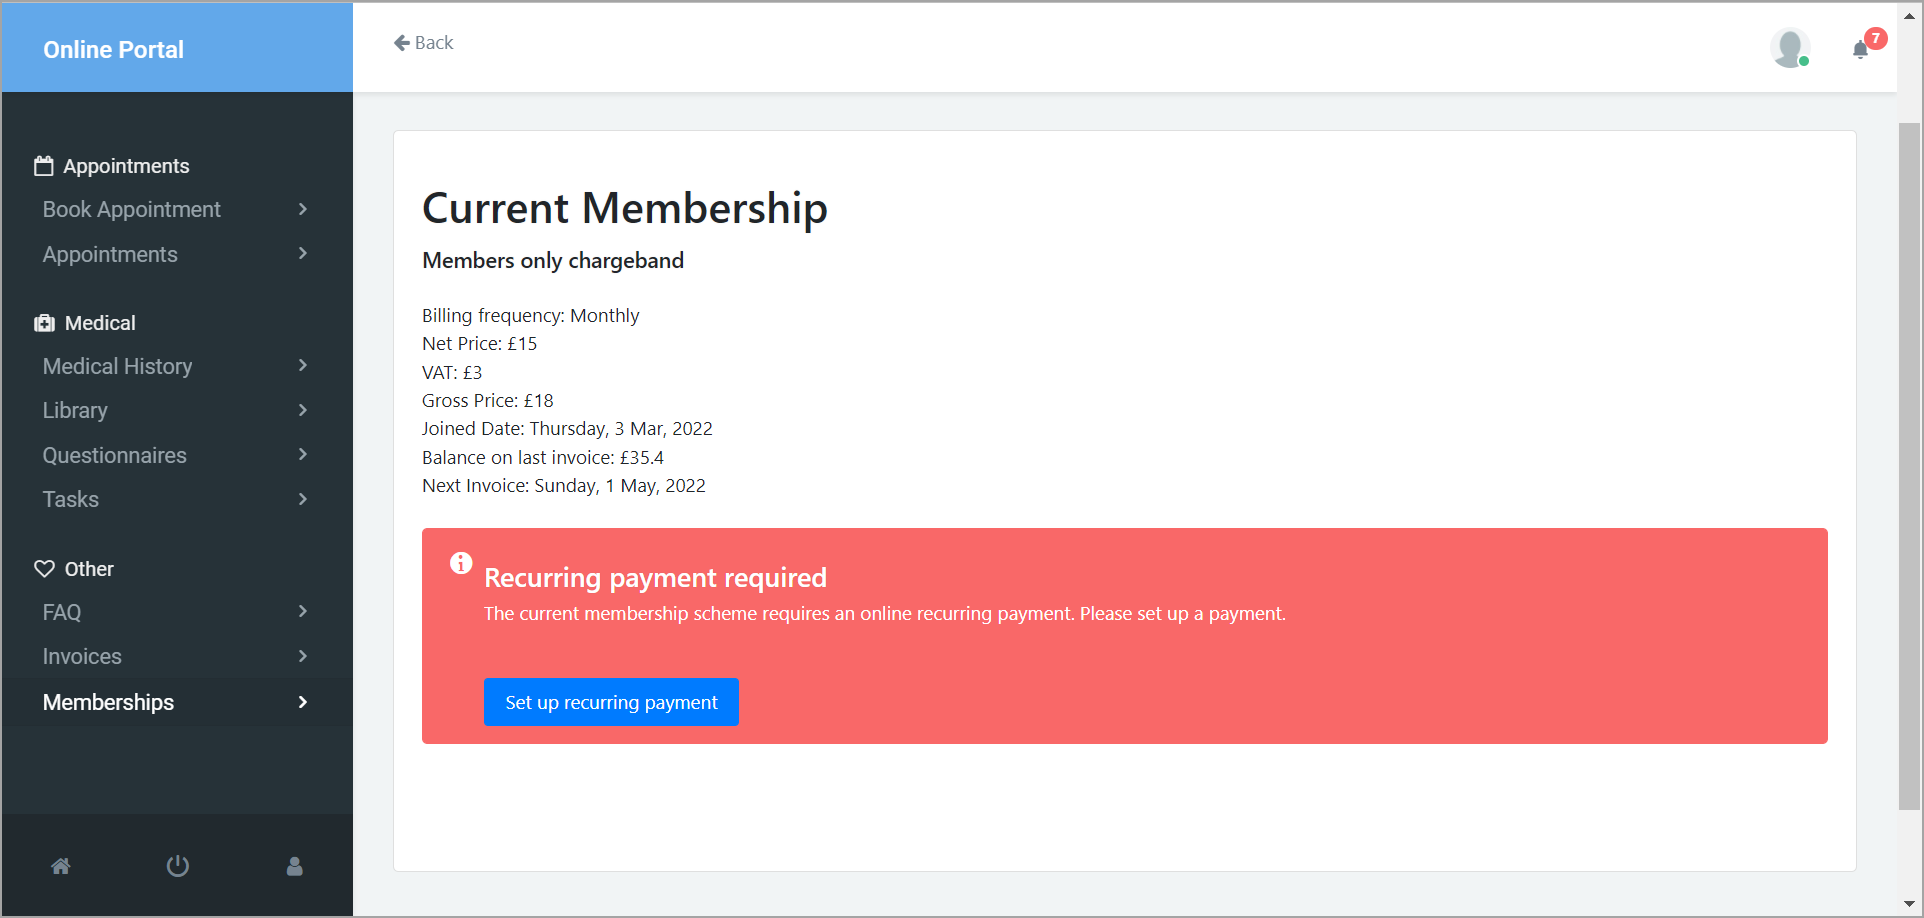 Patient_Portal_-_Current_membership_-_setup_recurring_payment